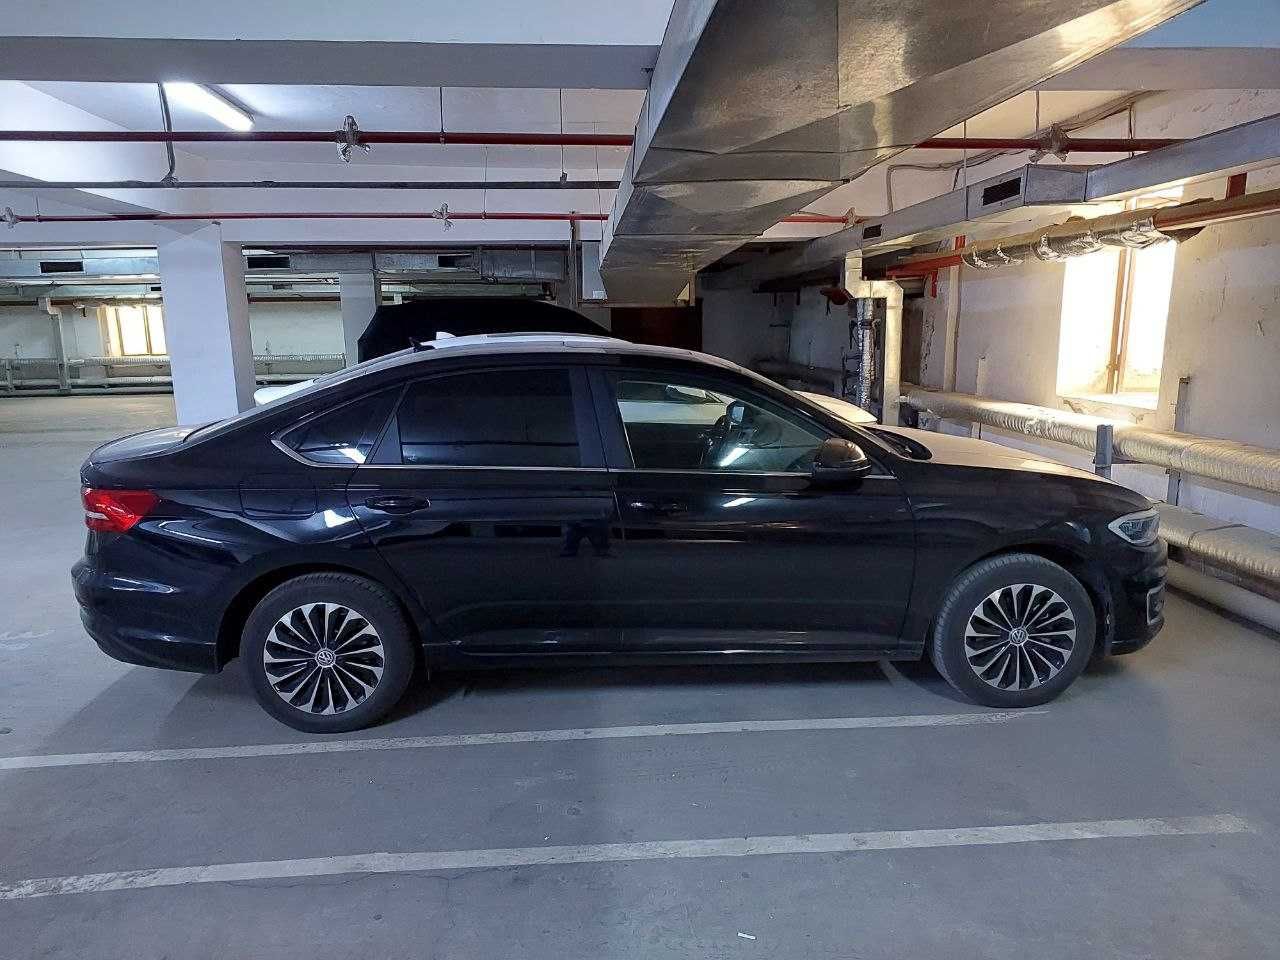 Volkswagen e-lavida black, черный цвет full комплектации